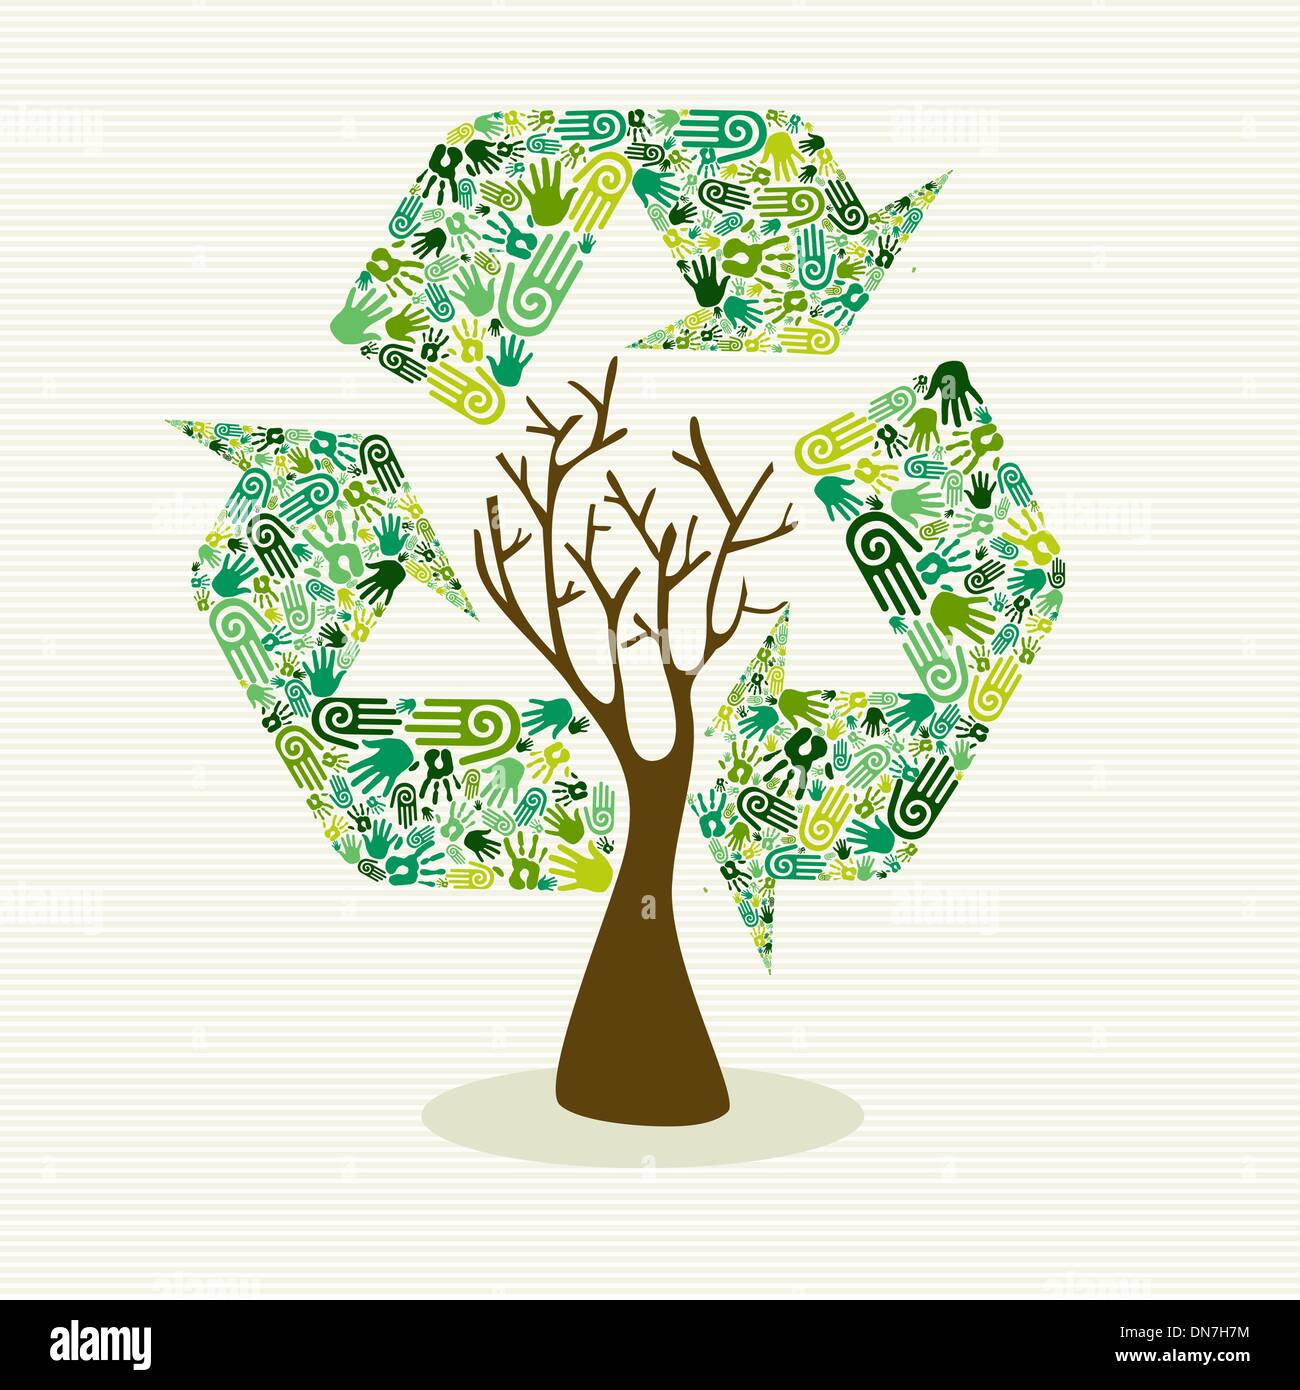 Sustainable development hand made tree Stock Vector